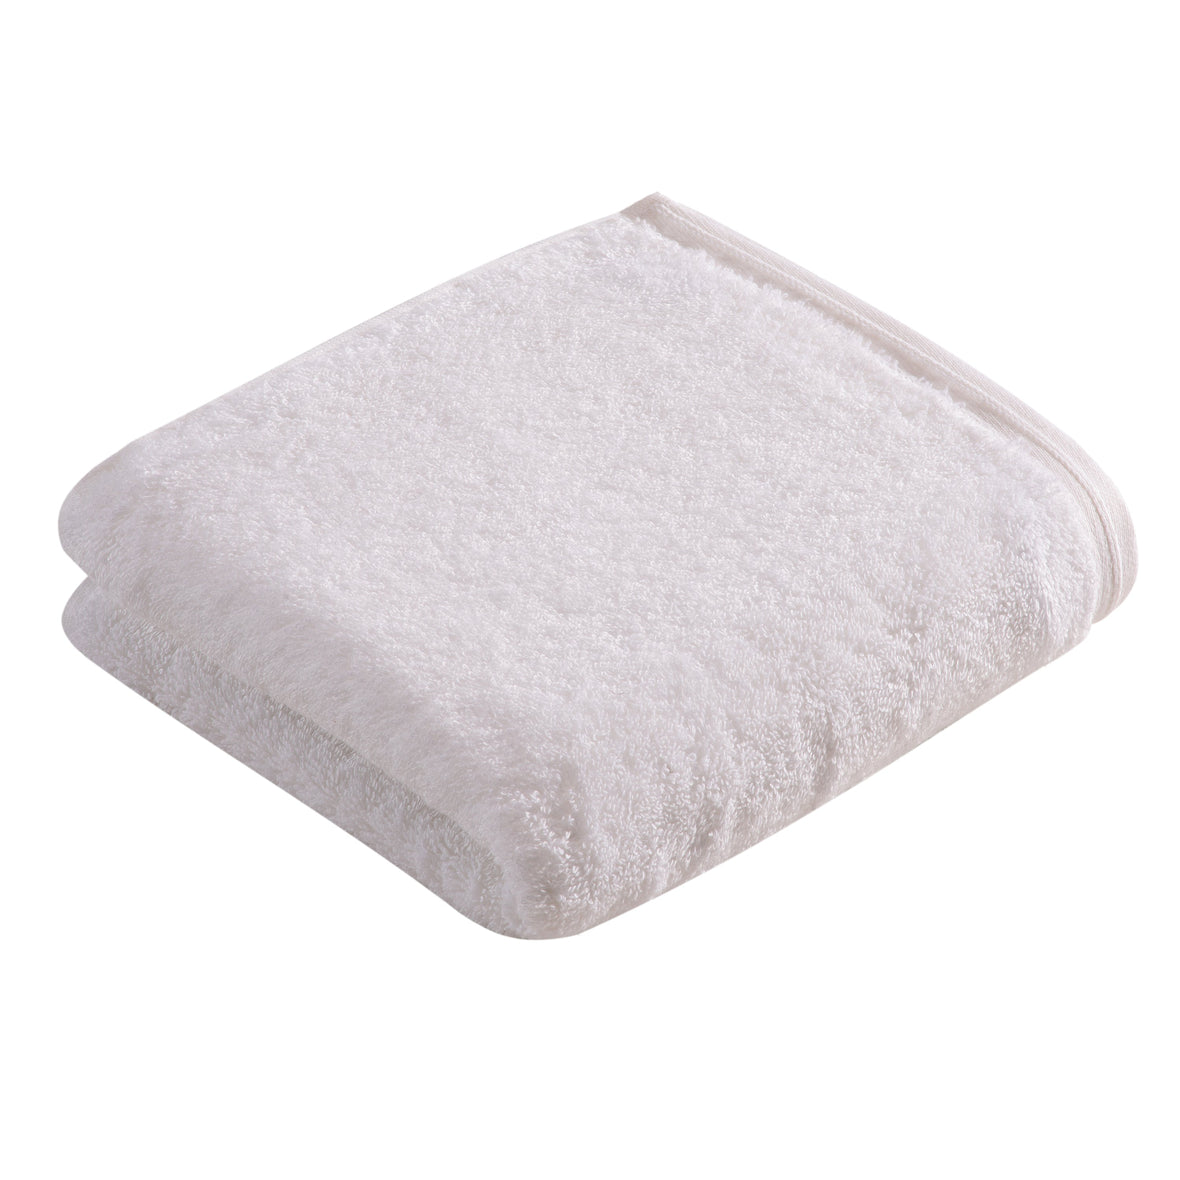 Vegan-Life-Hand-Towel-White-Towels-Vossen-Bathroomwear-bathroom-Geoghegans-Navan-Home-interiors